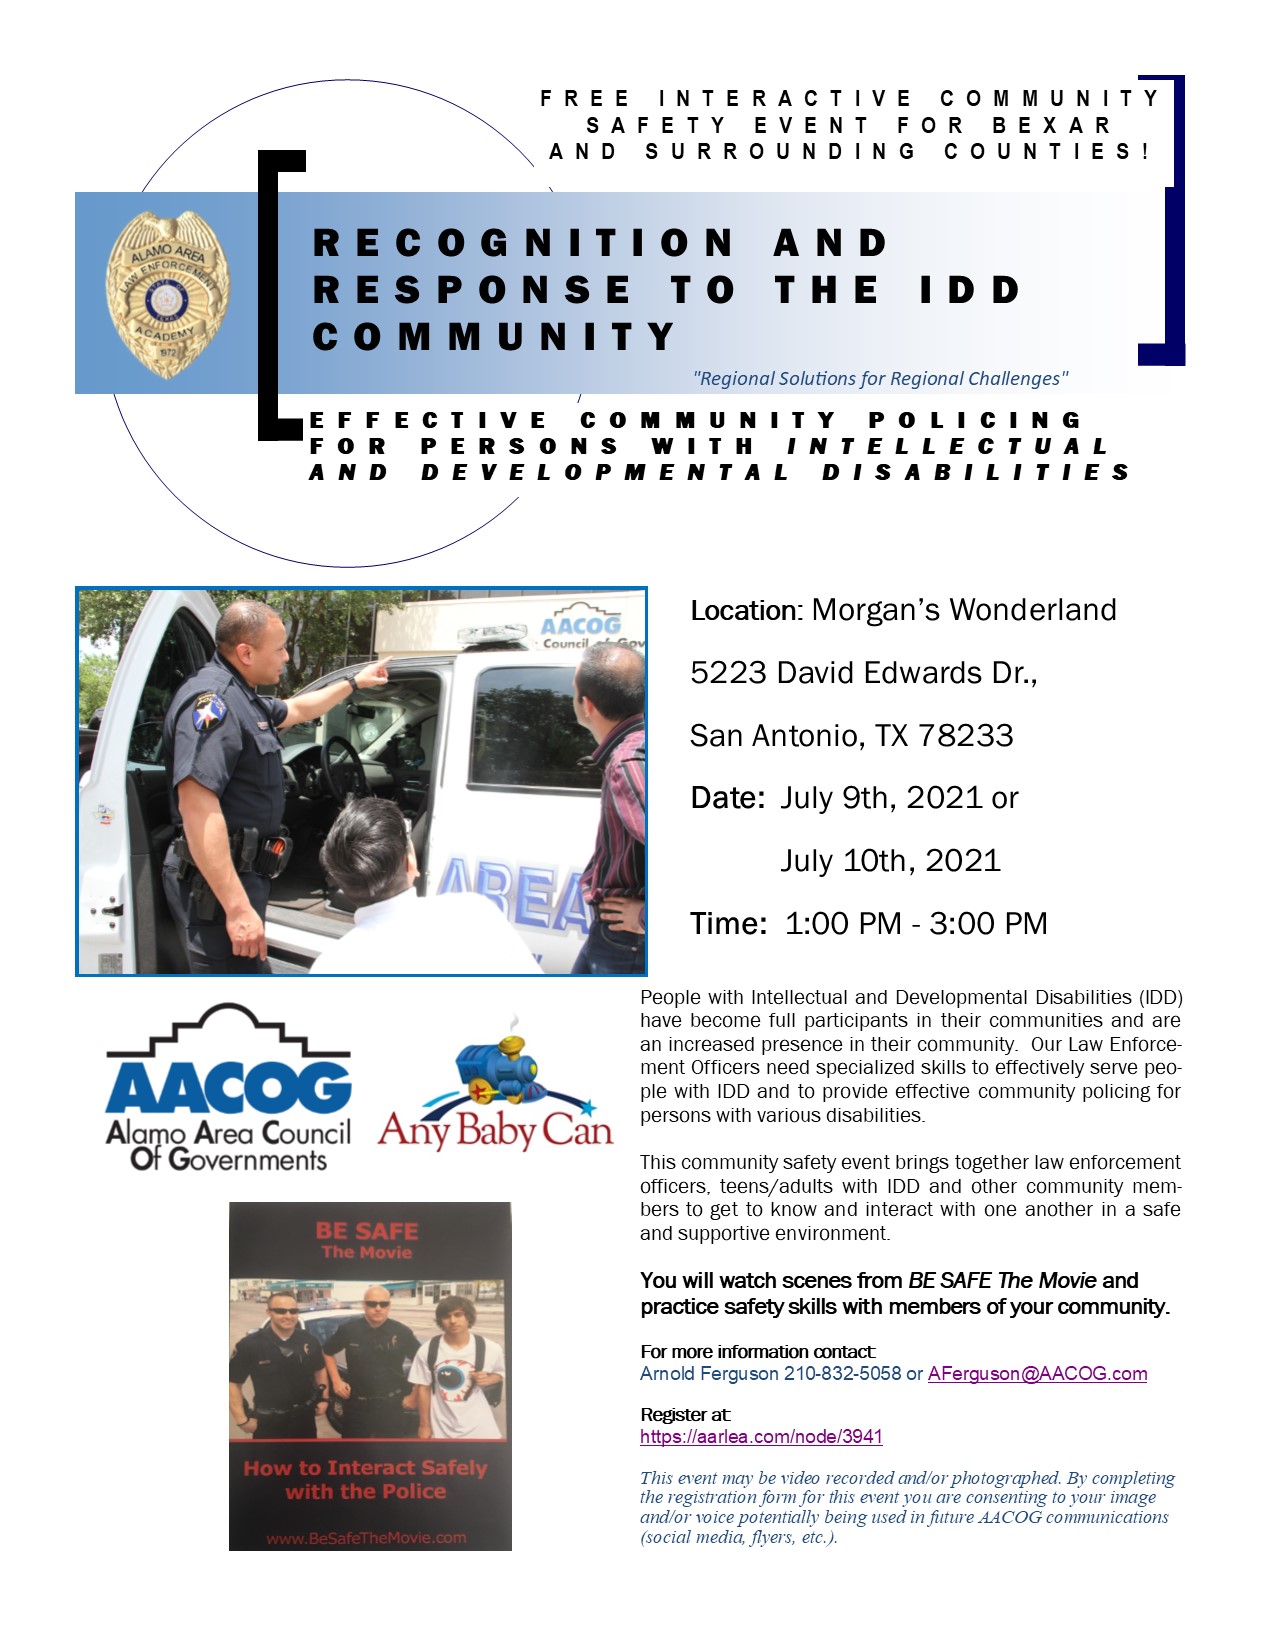 IDD Recognition Community Flyer 7-9-21 1pm-3pm